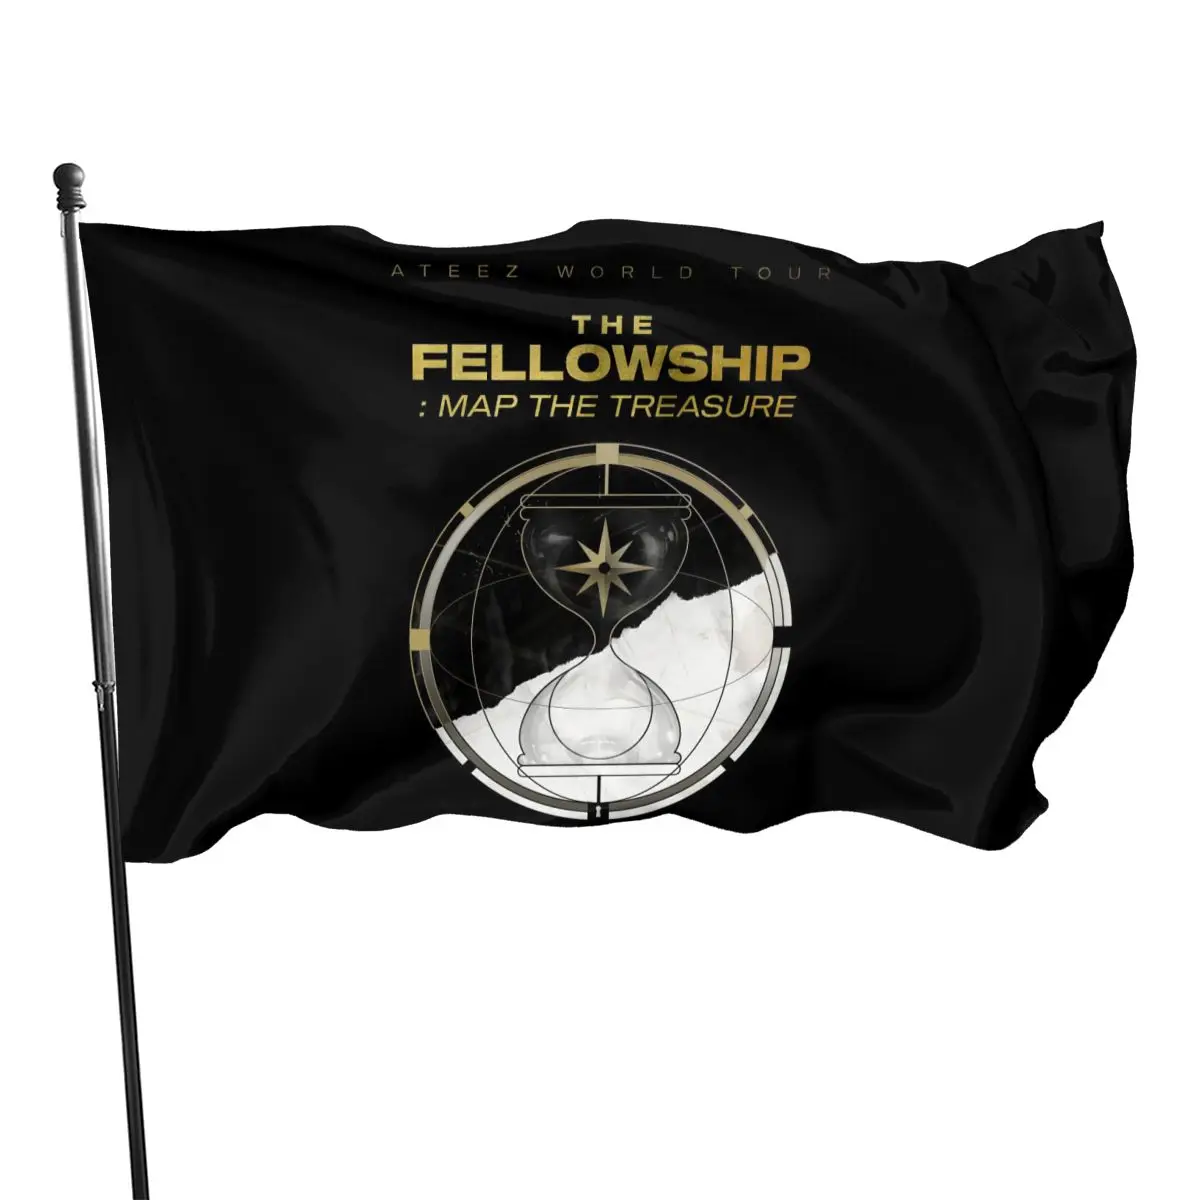 

Ateez Kpop The Fellowship Map The Treasure Tour 2020 Concert Merch Atmungsaktives S-5Xl Headban Spring Adult Flag